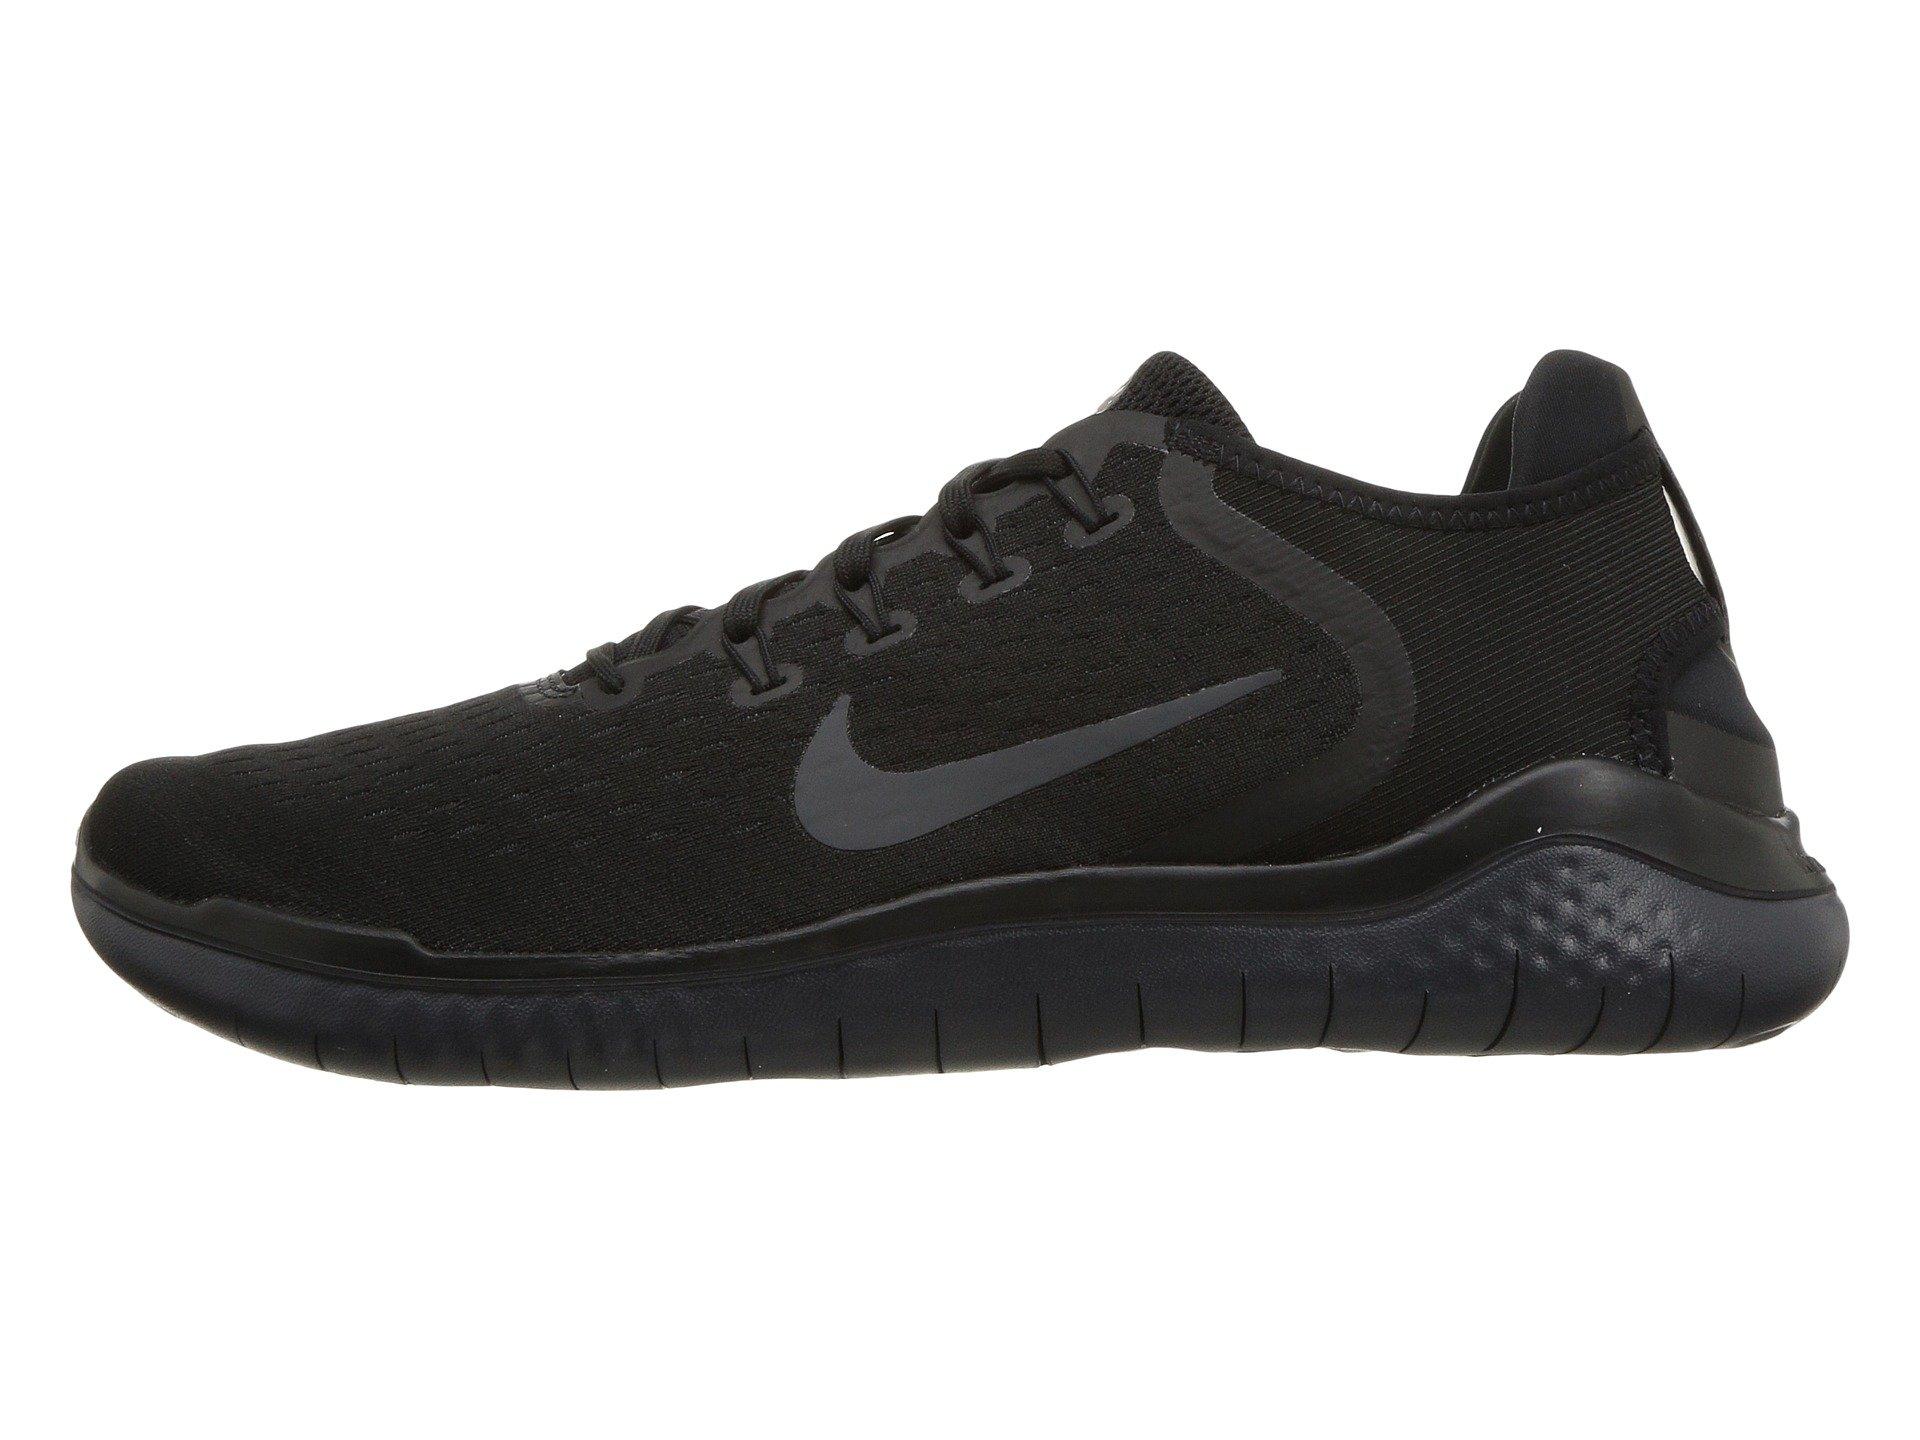 Nike Free Rn 2018 (black/anthracite) Men's Running Shoes for Men | Lyst